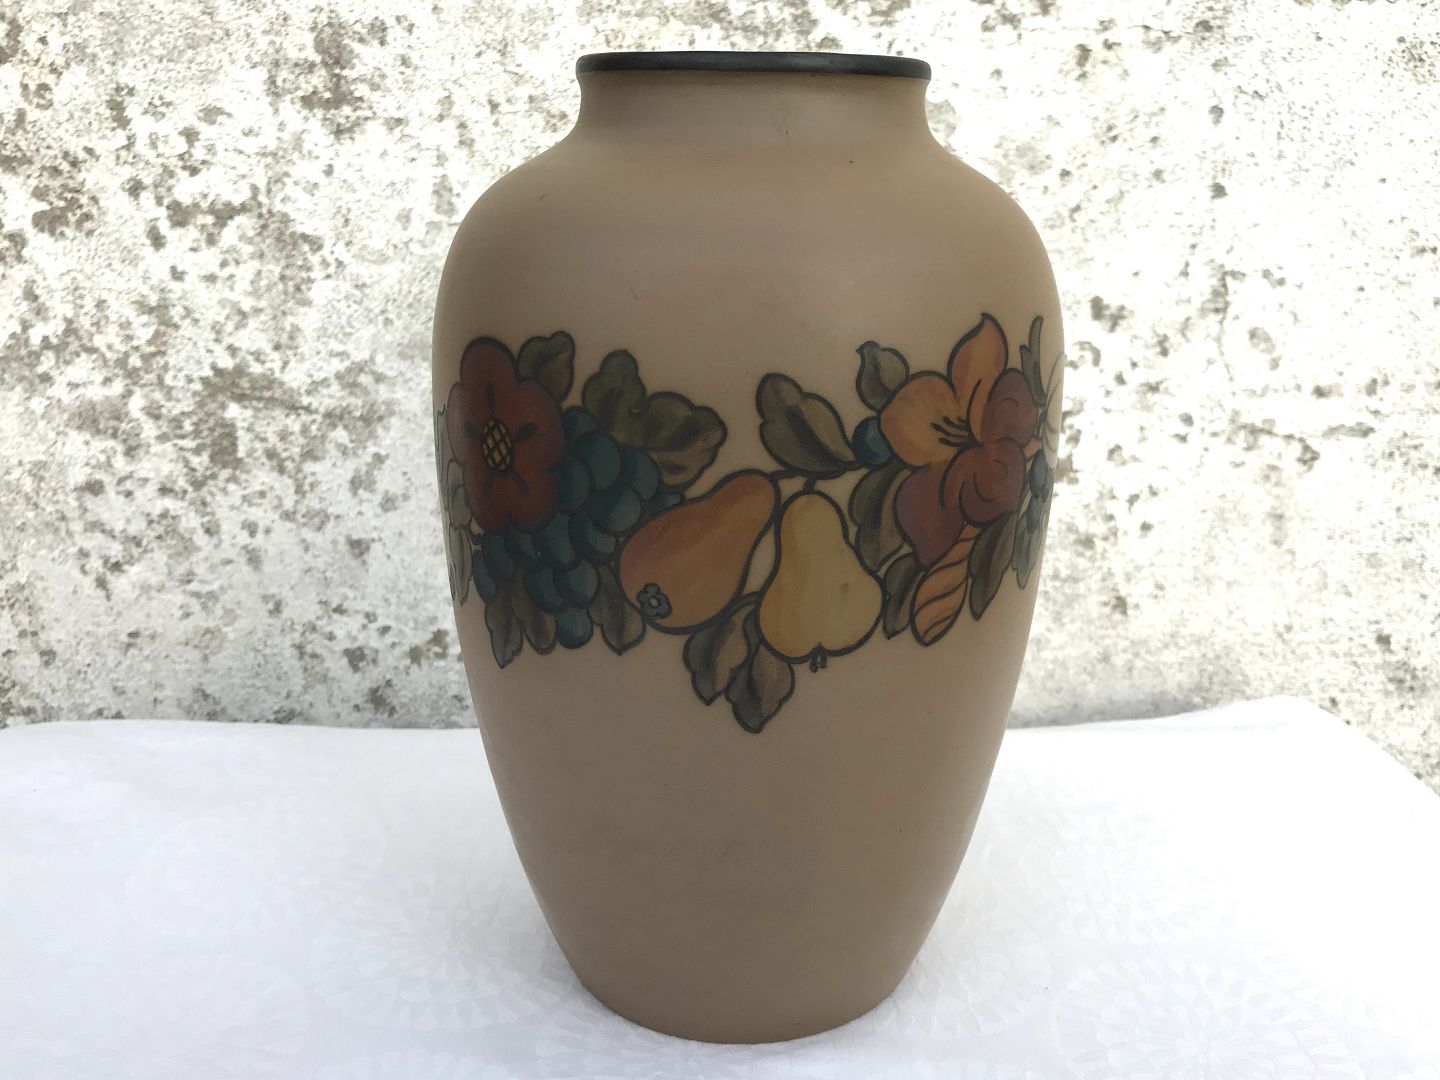 Orphan kom videre nåde Moster Olga - Antik & Design - Bornholmsk keramik * Hjorth * Vase * *300kr  - Bornholmsk keramik * Hjorth * Vase * *300kr